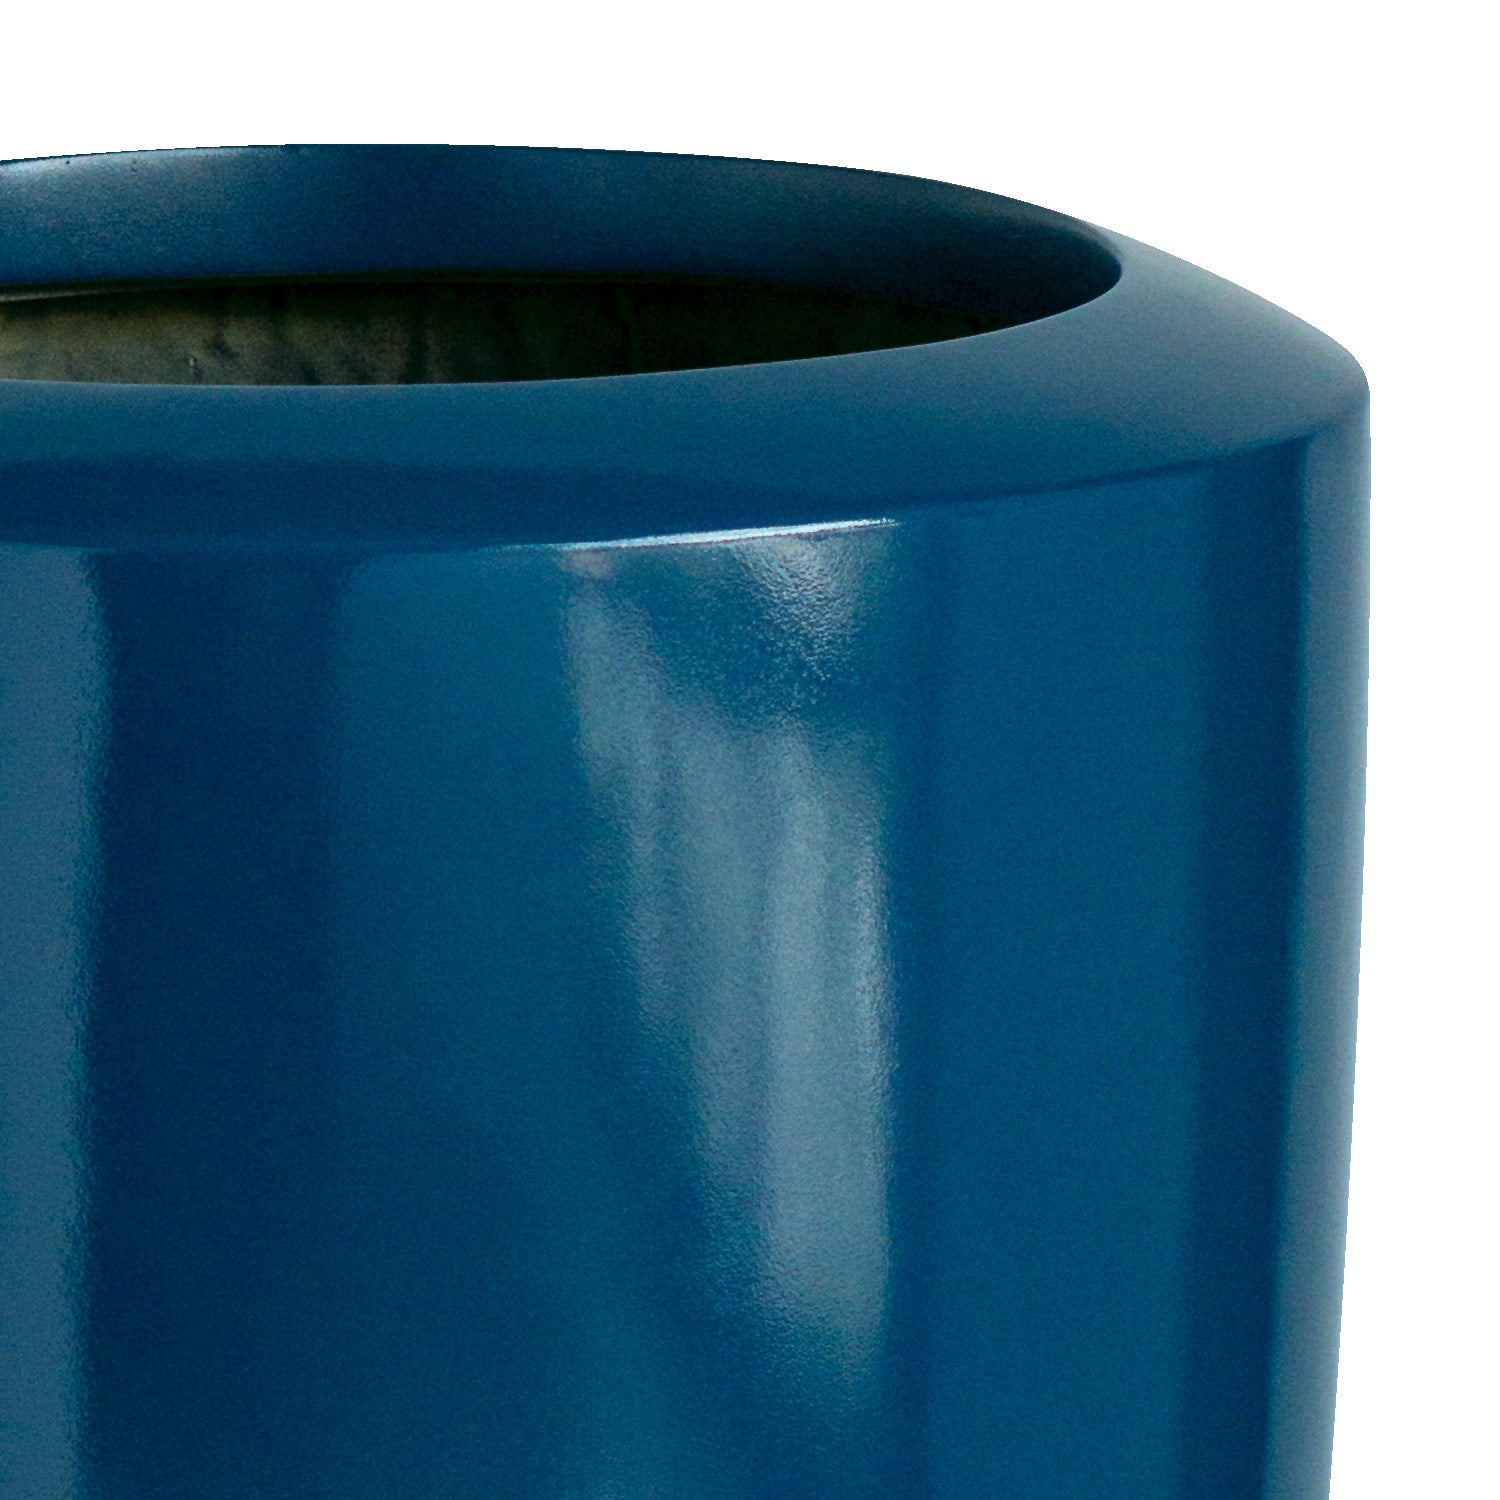 Close up of a large fiberglass barrel-shaped planter on a white background. Gloss Blue finish.